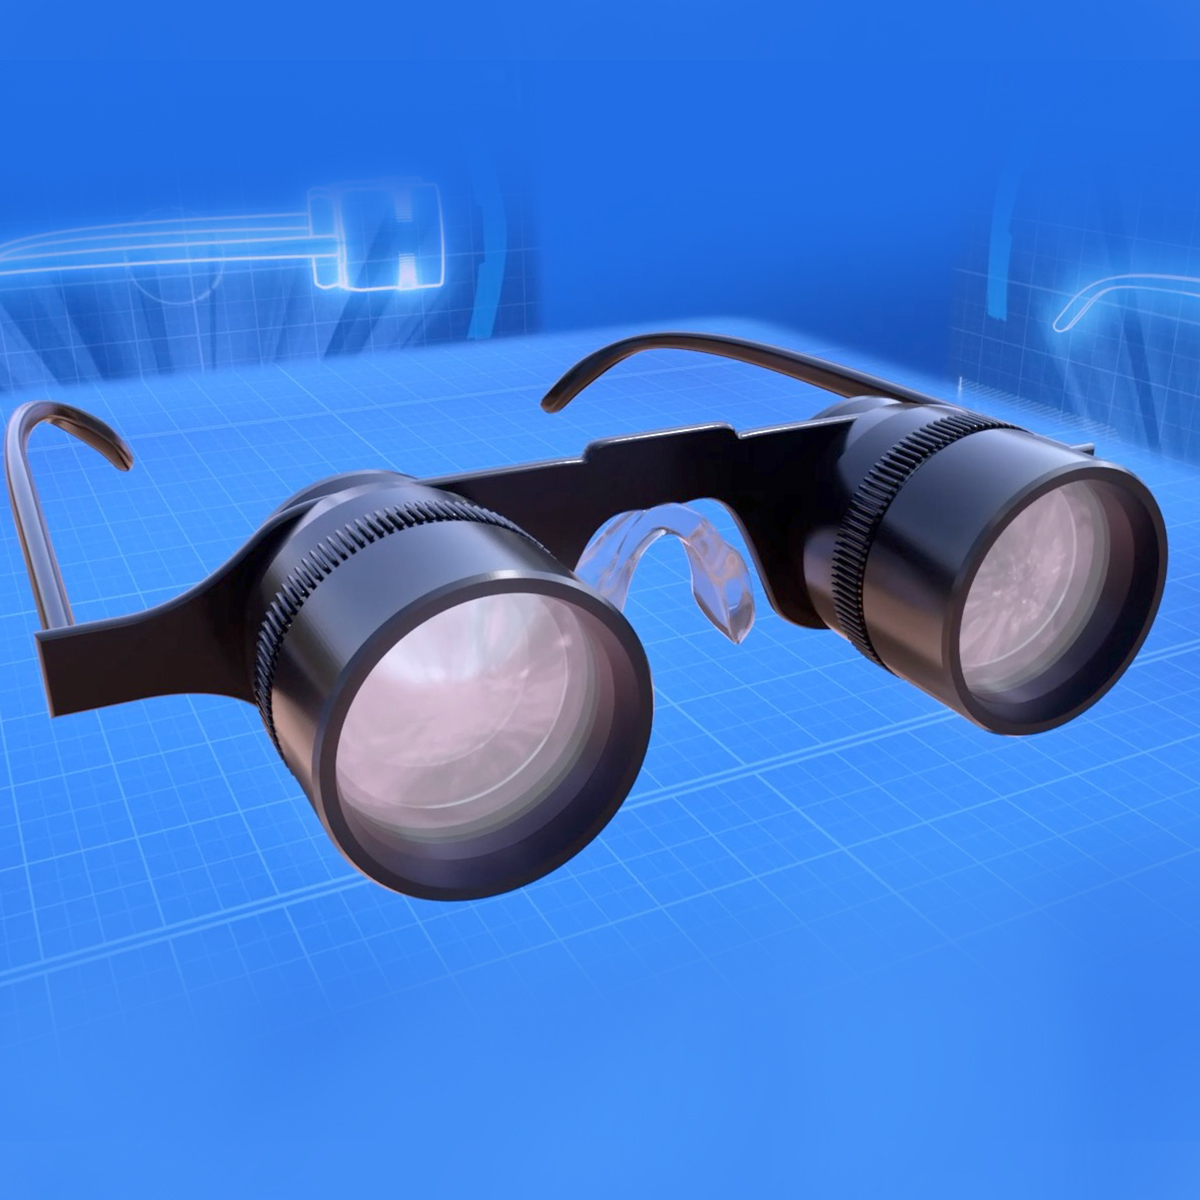 Zoom Optics Deluxe - The wearable, powerful hands-free binoculars